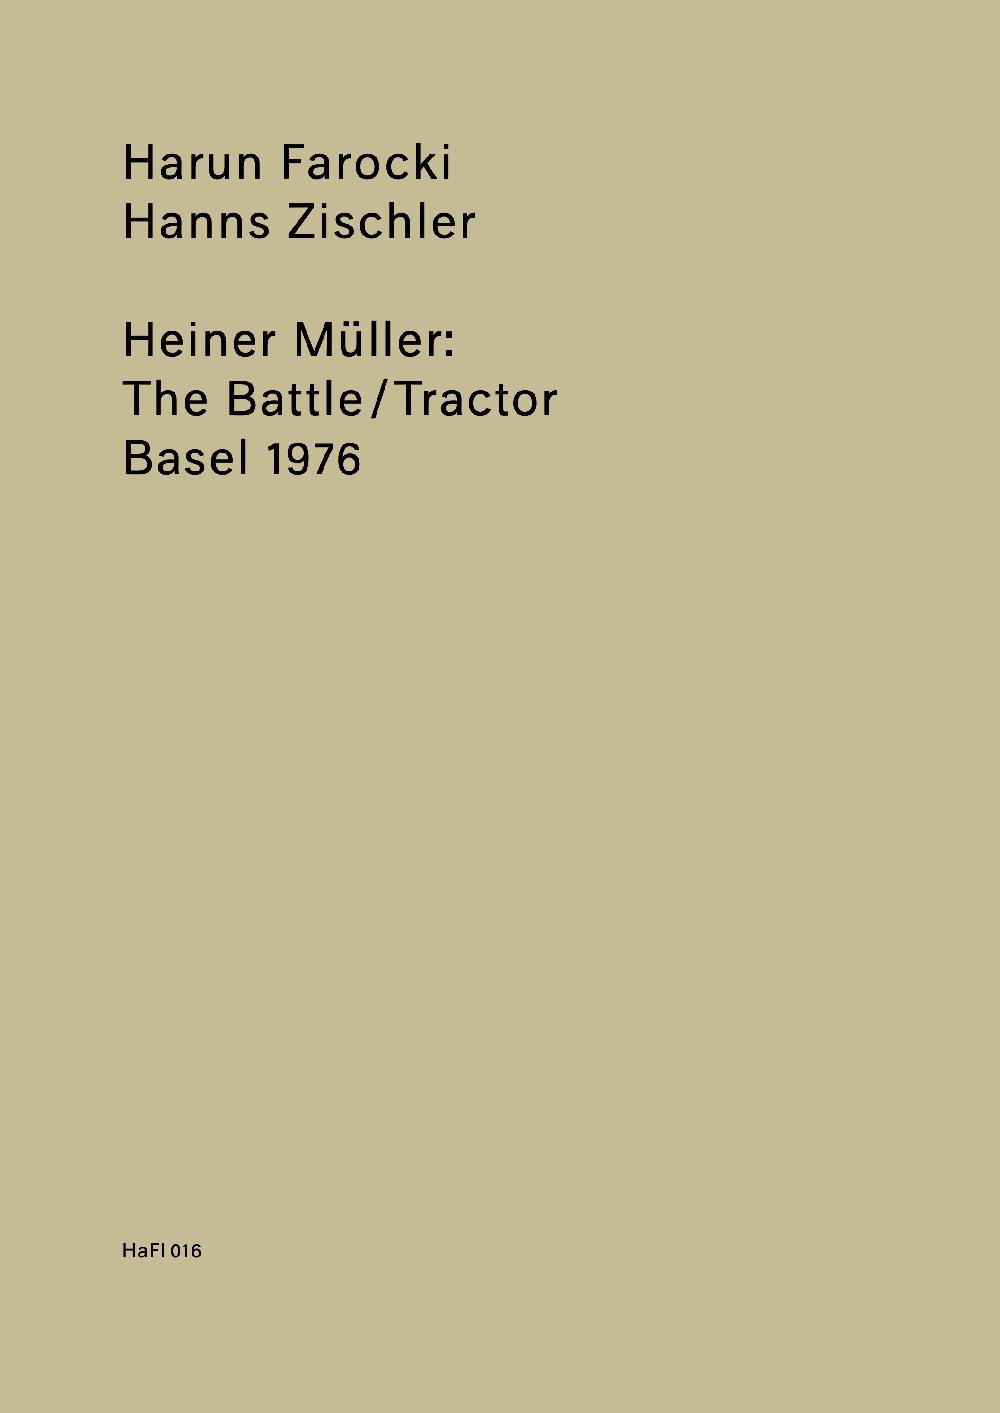 Harun Farocki/Hanns Zischler - Heiner Müller: The Battle/Tractor, Basel 1976